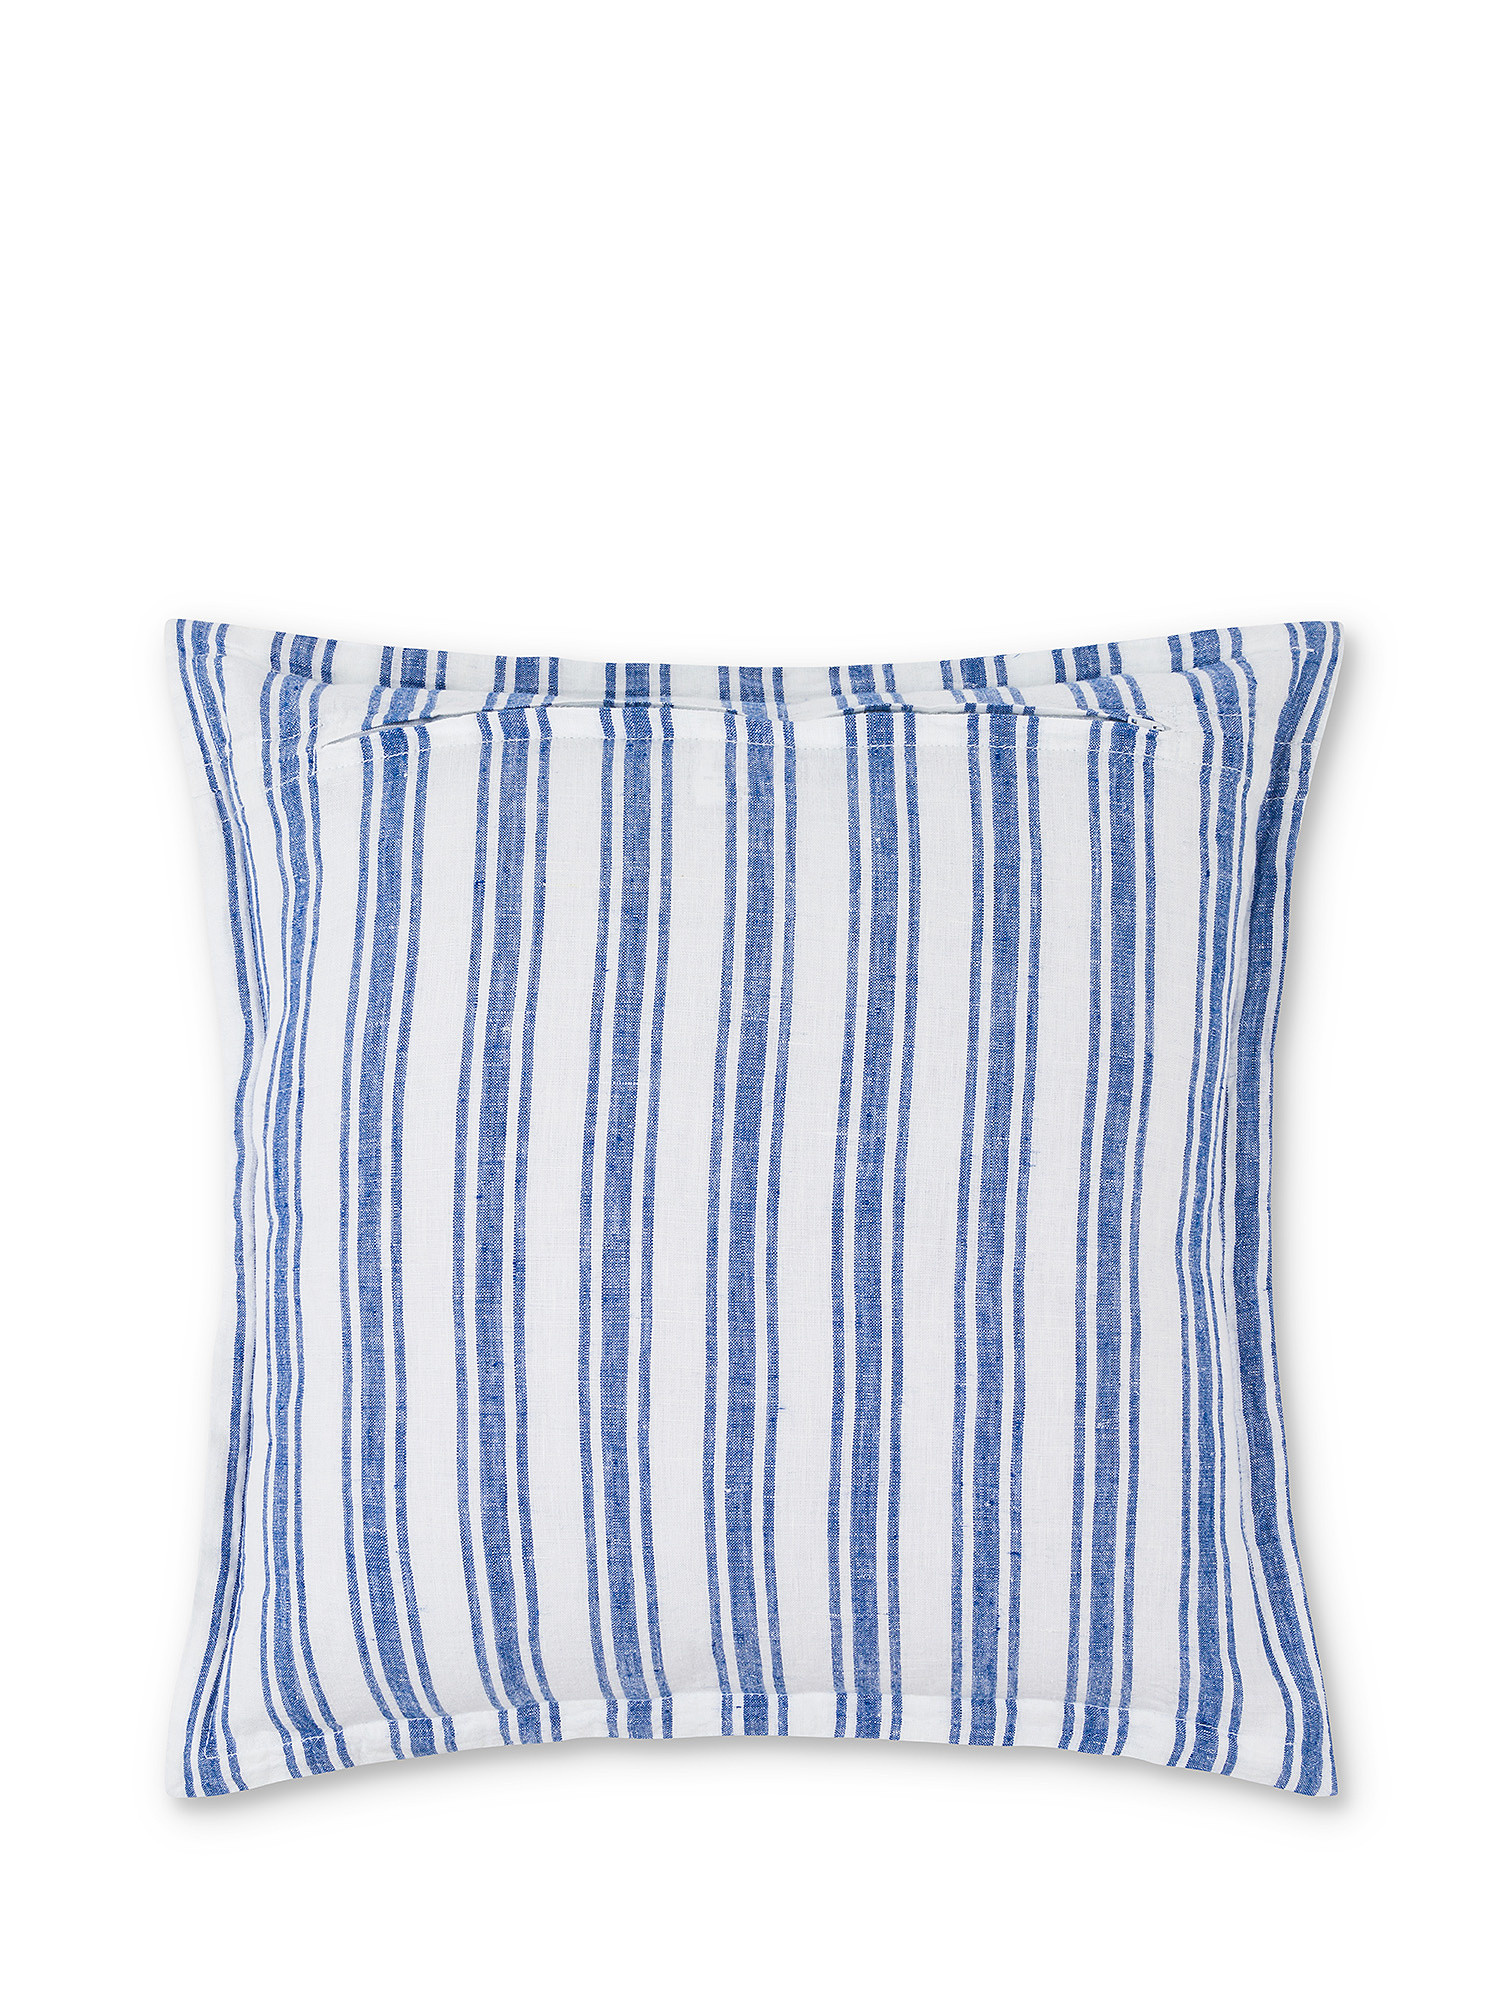 Cuscino puro lino a righe 45x45cm, Azzurro, large image number 1